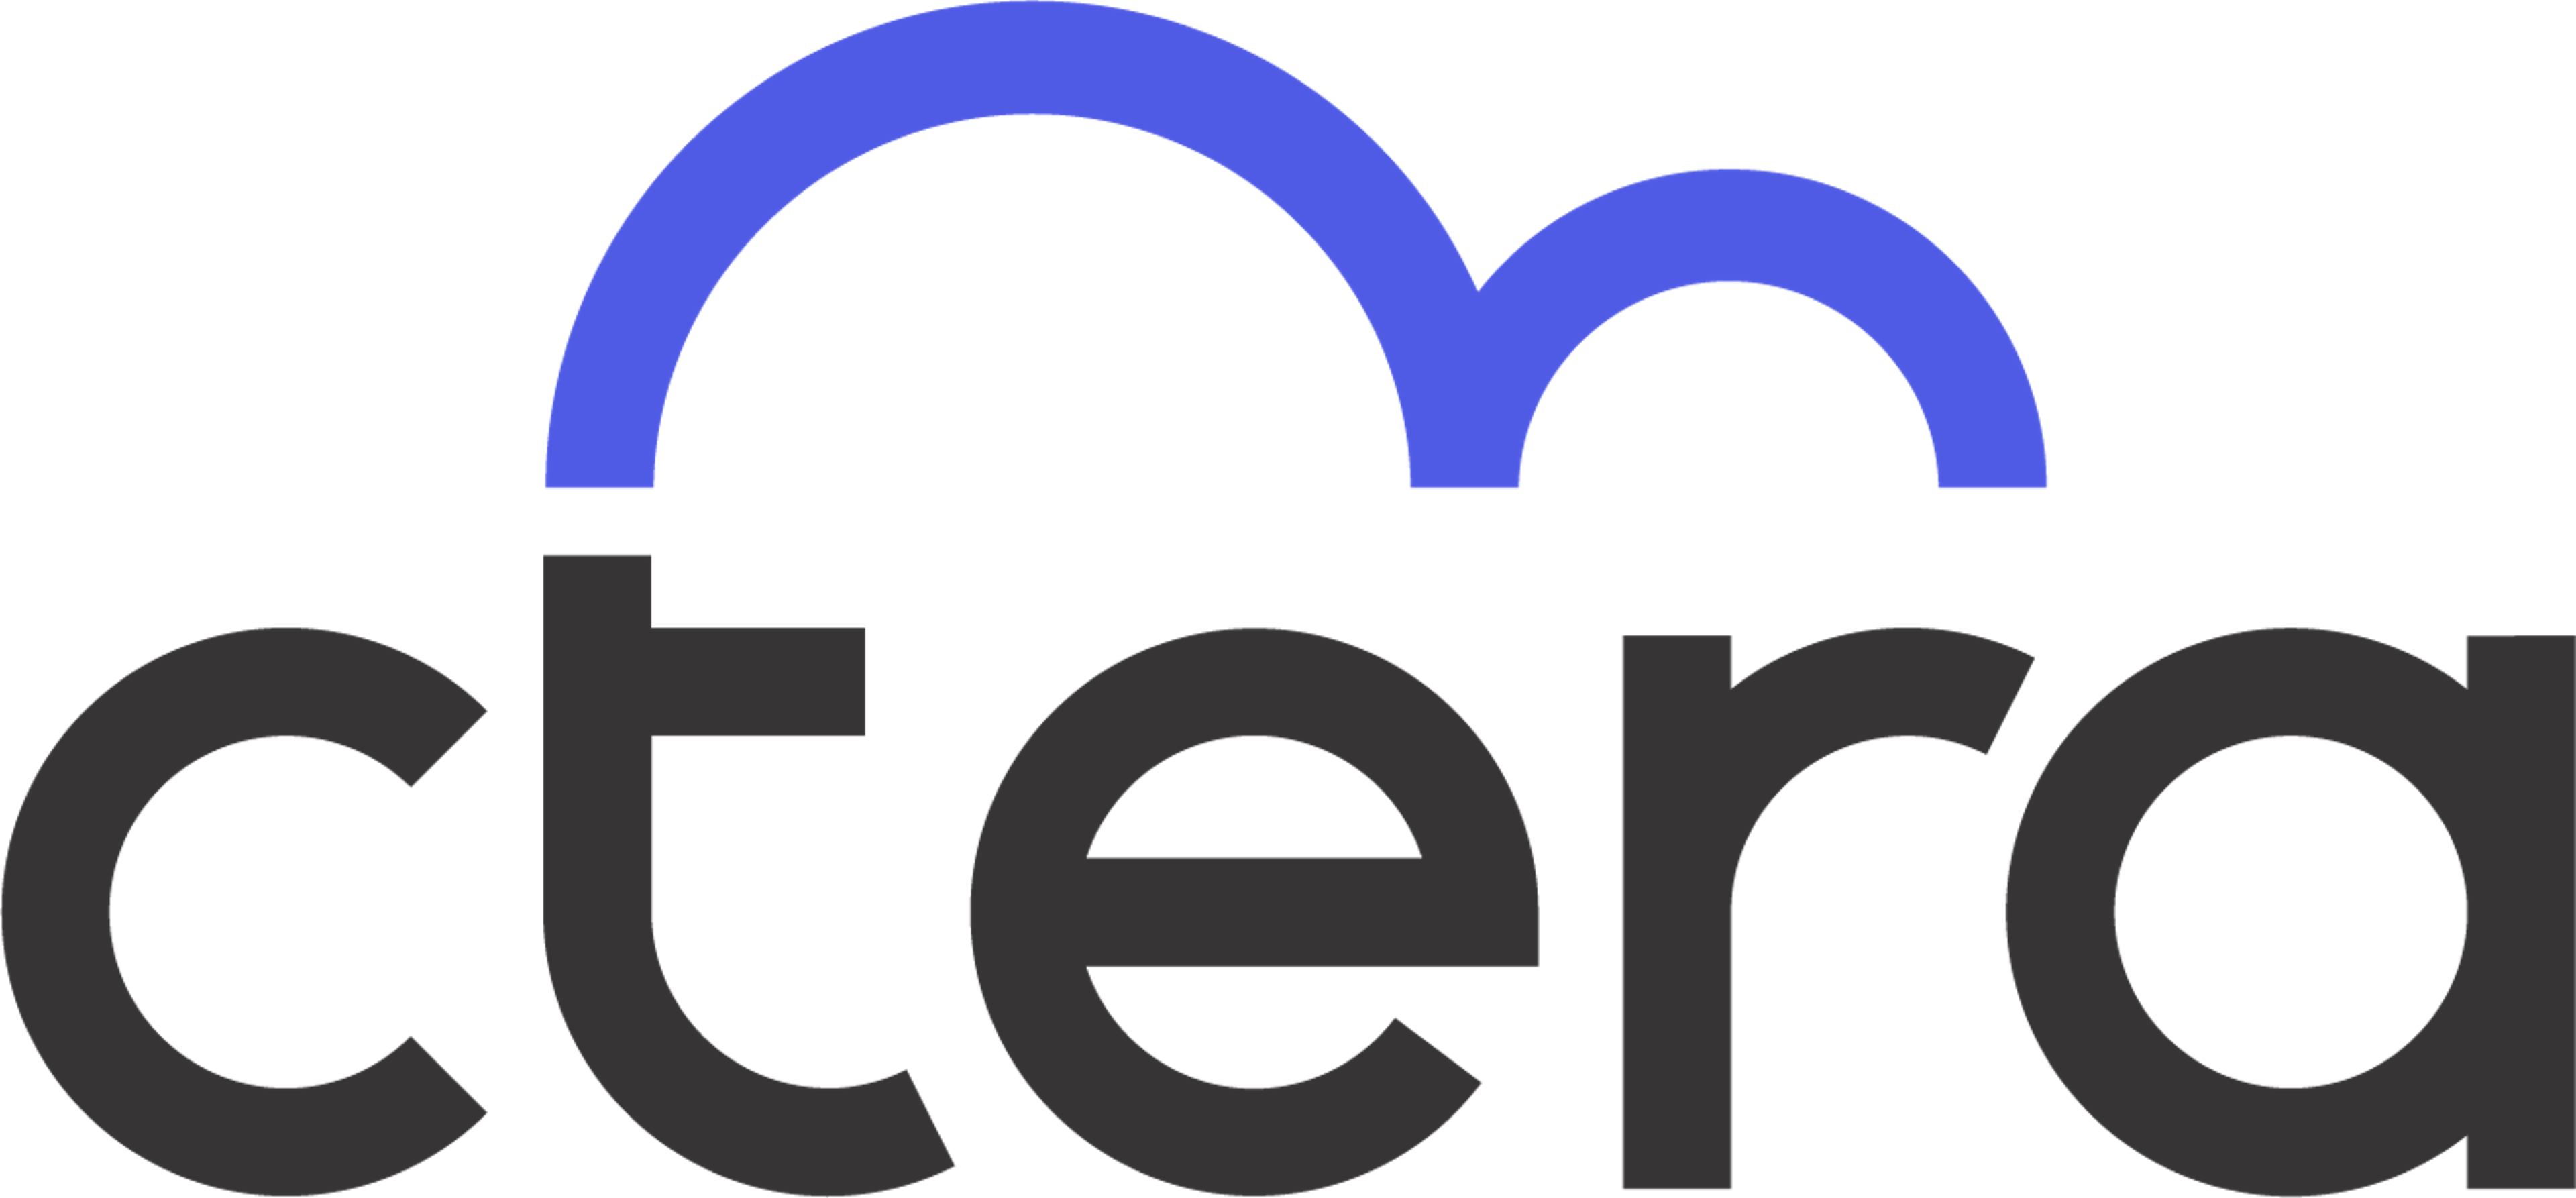 CTERA Logo